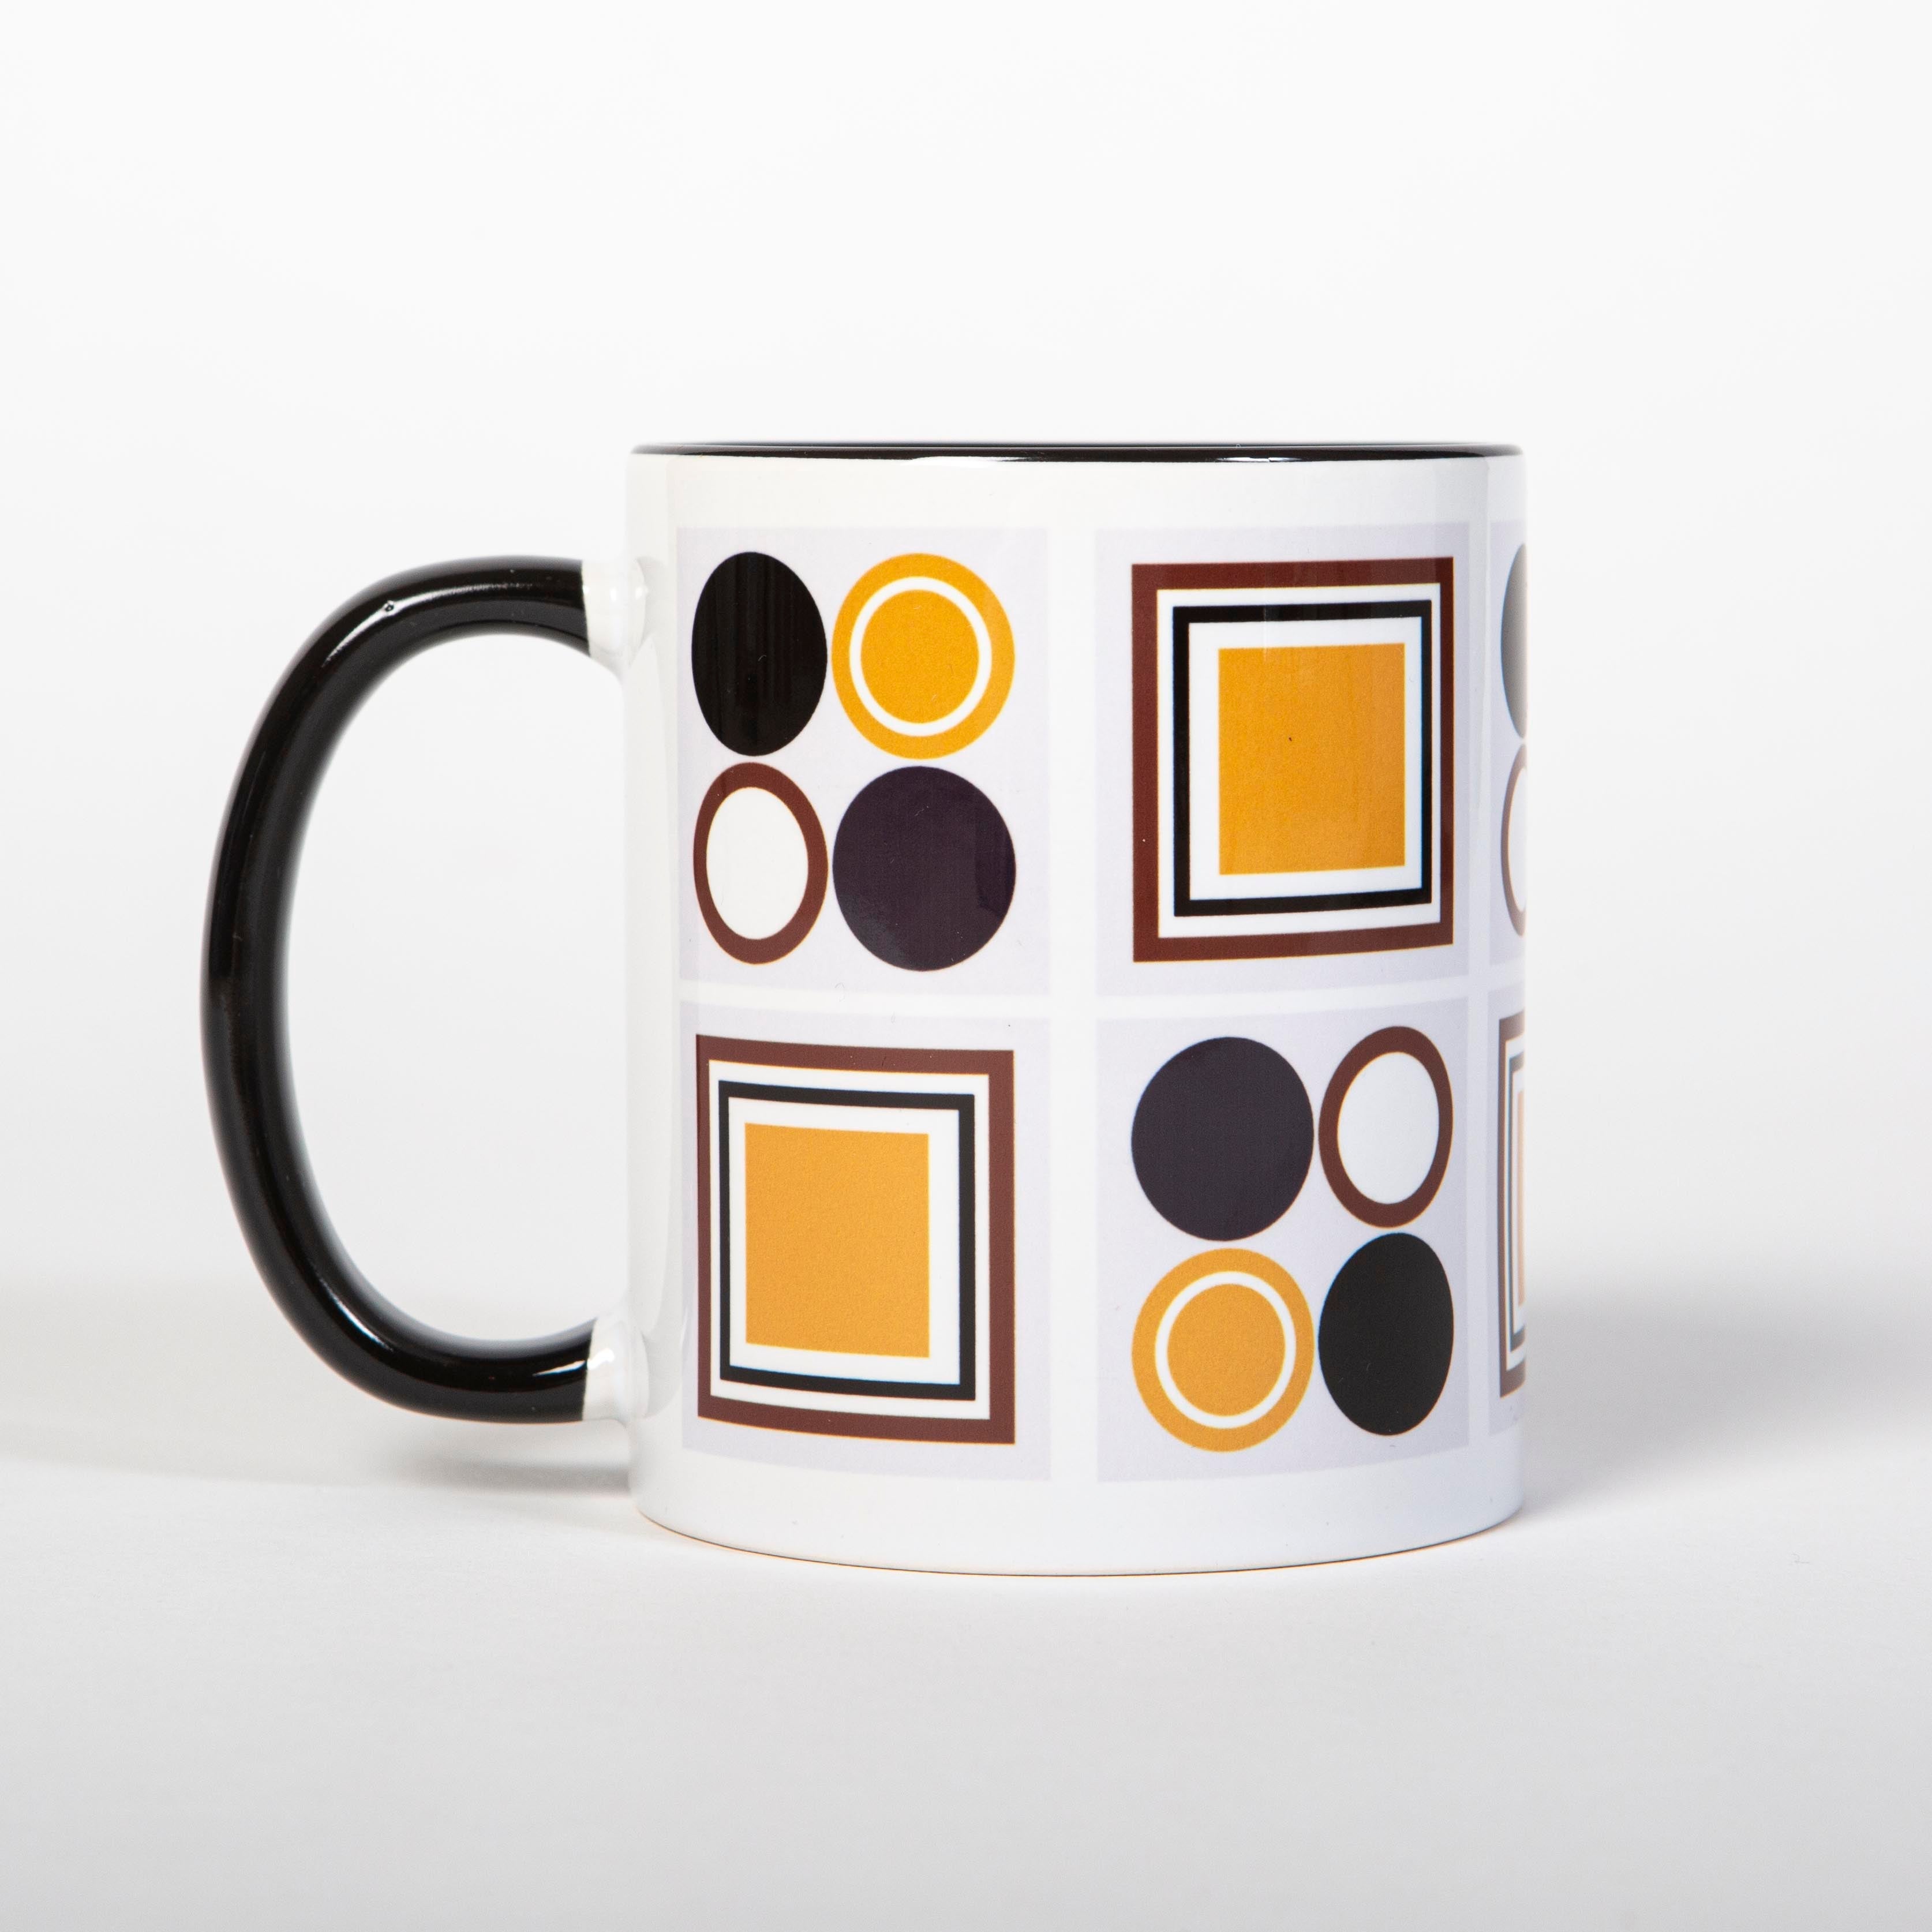 Schitts' Squares Coffee Mug